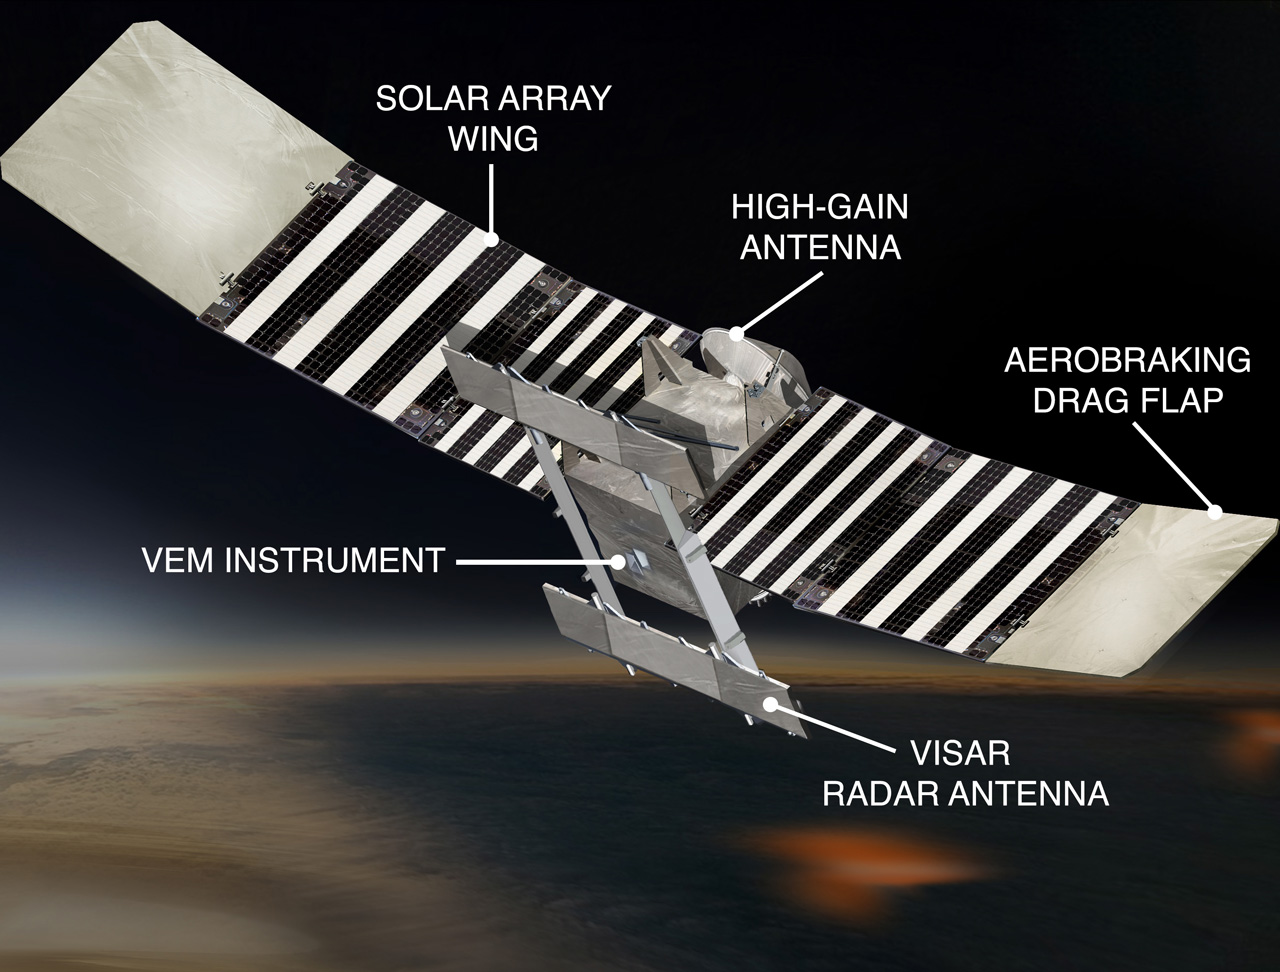 VERITAS spacecraft - labeled